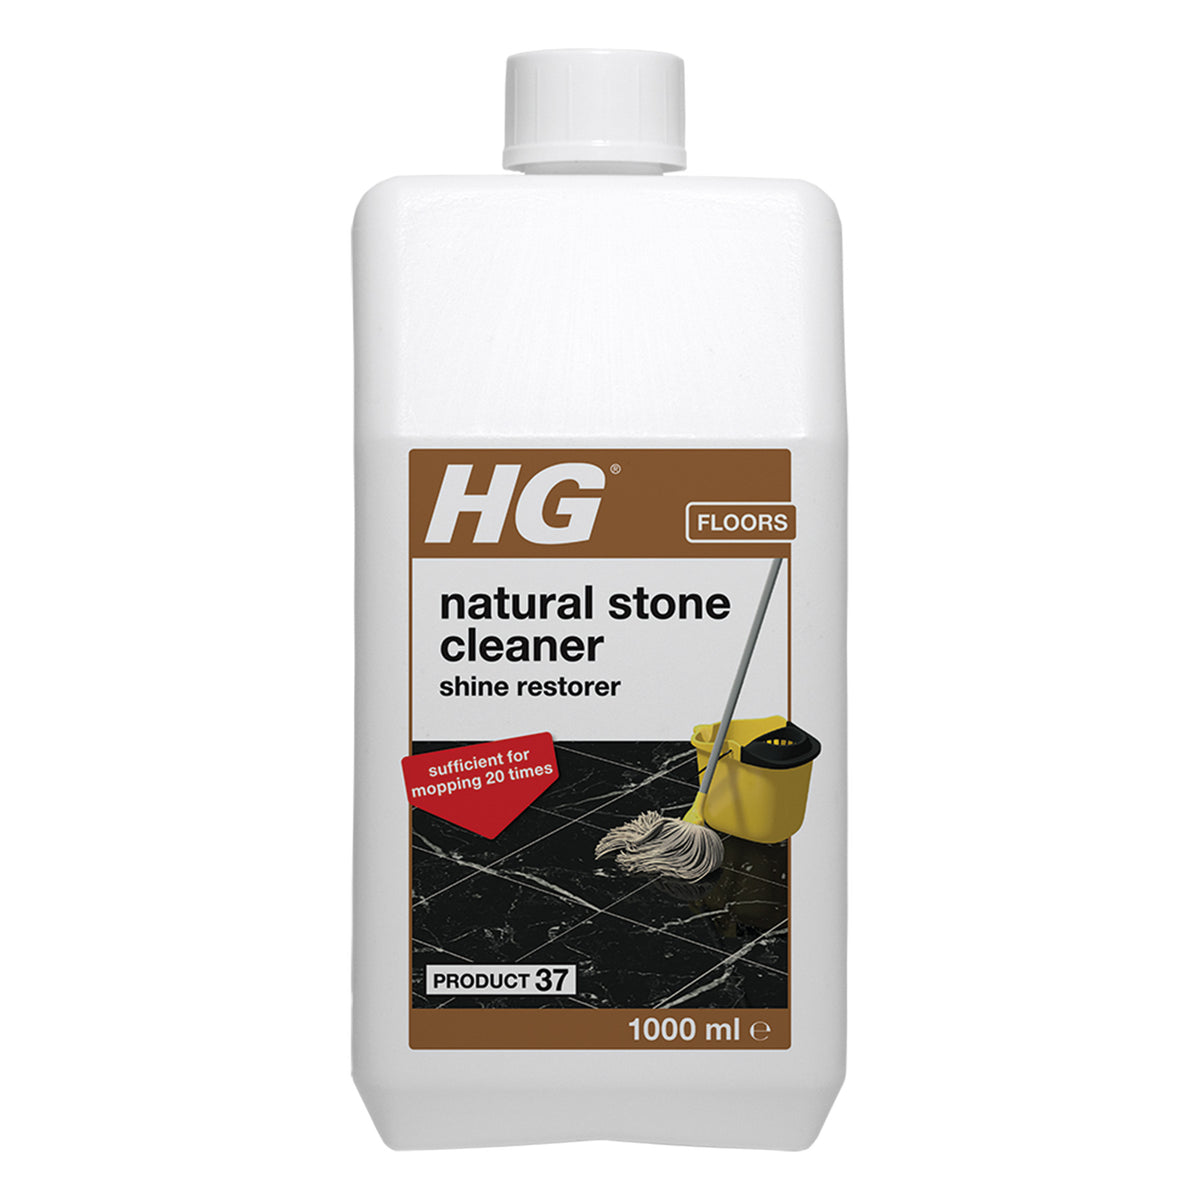 Shine restoring cleaner for natural stone 1 liter